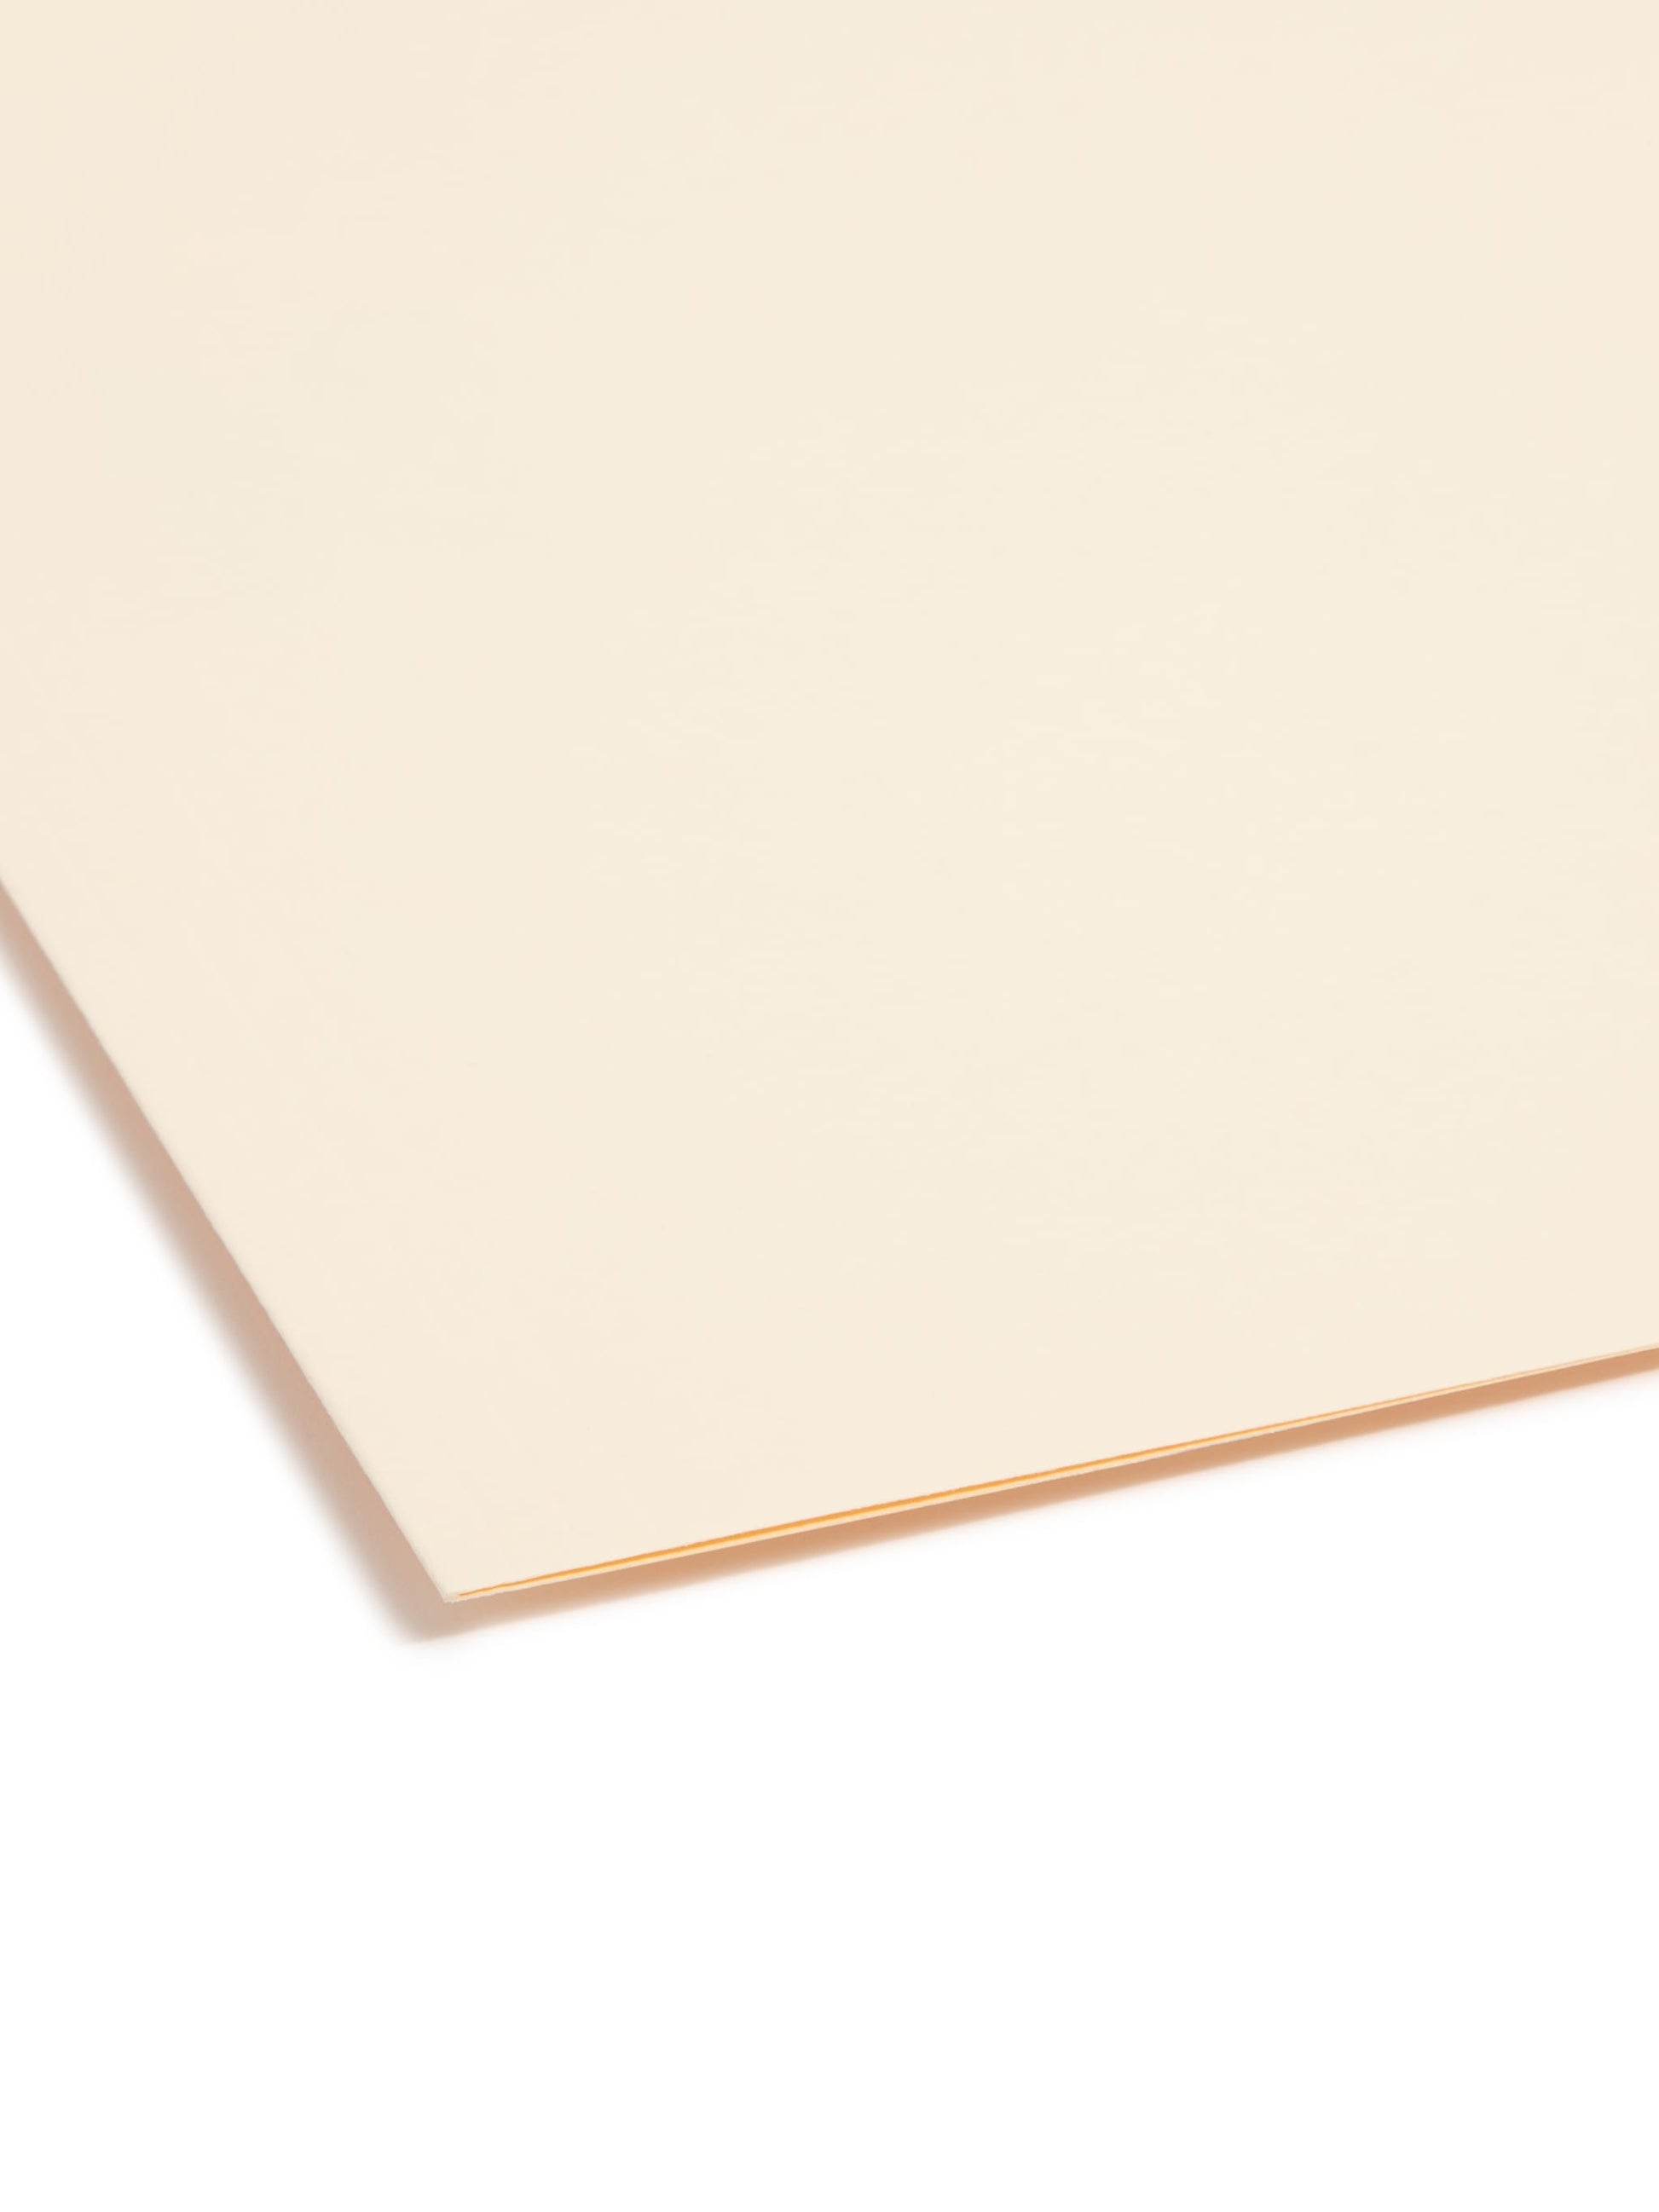 Heavyweight Fastener File Folders, Manila Color, Legal Size, Set of 50, 086486196000